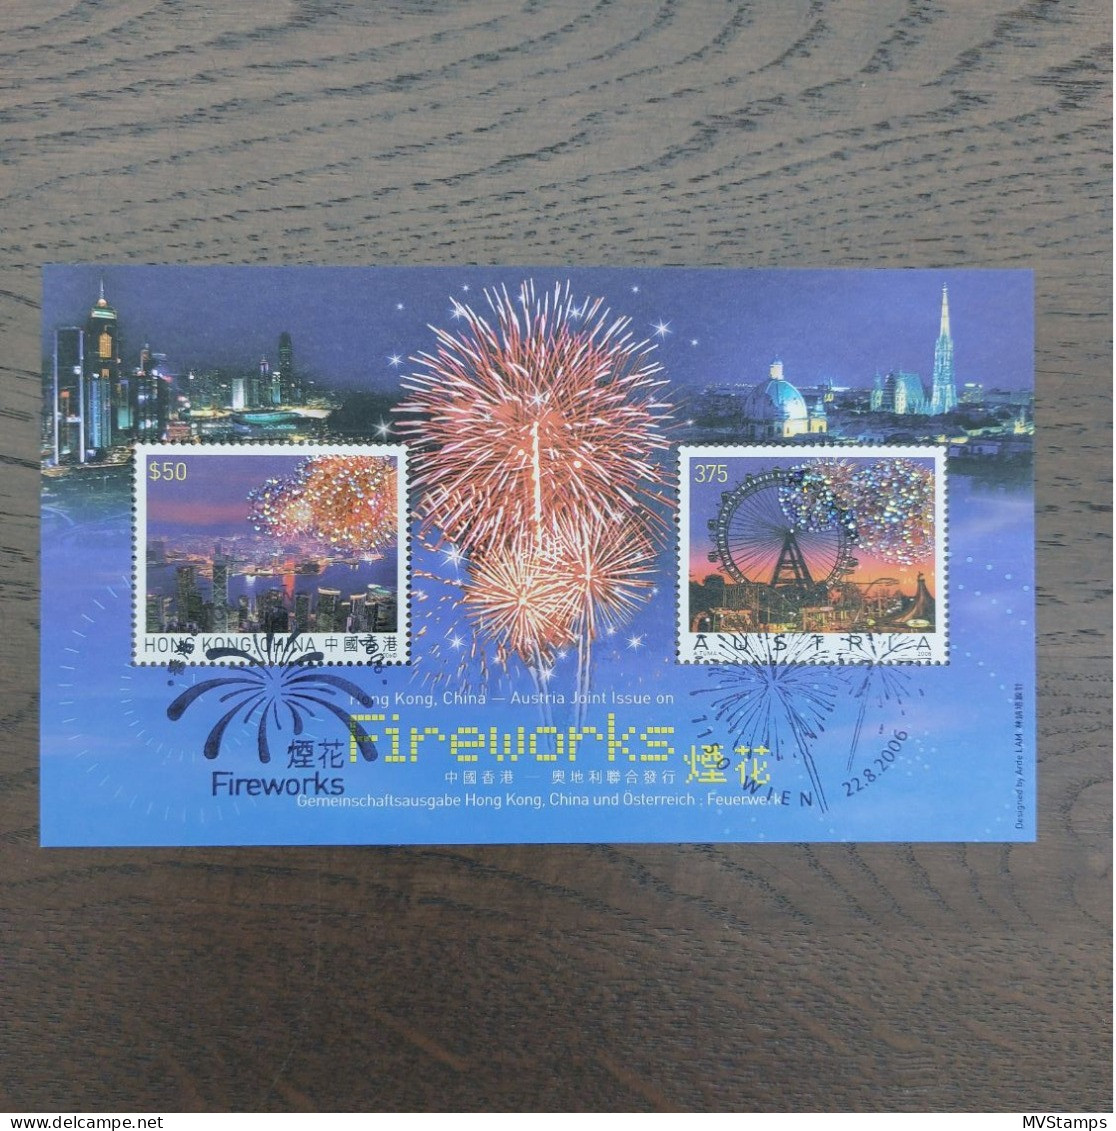 Austria (Hong Kong) 2006 Sheet Fireworks Stamps (Michel Block 35) Used - Blocs & Feuillets